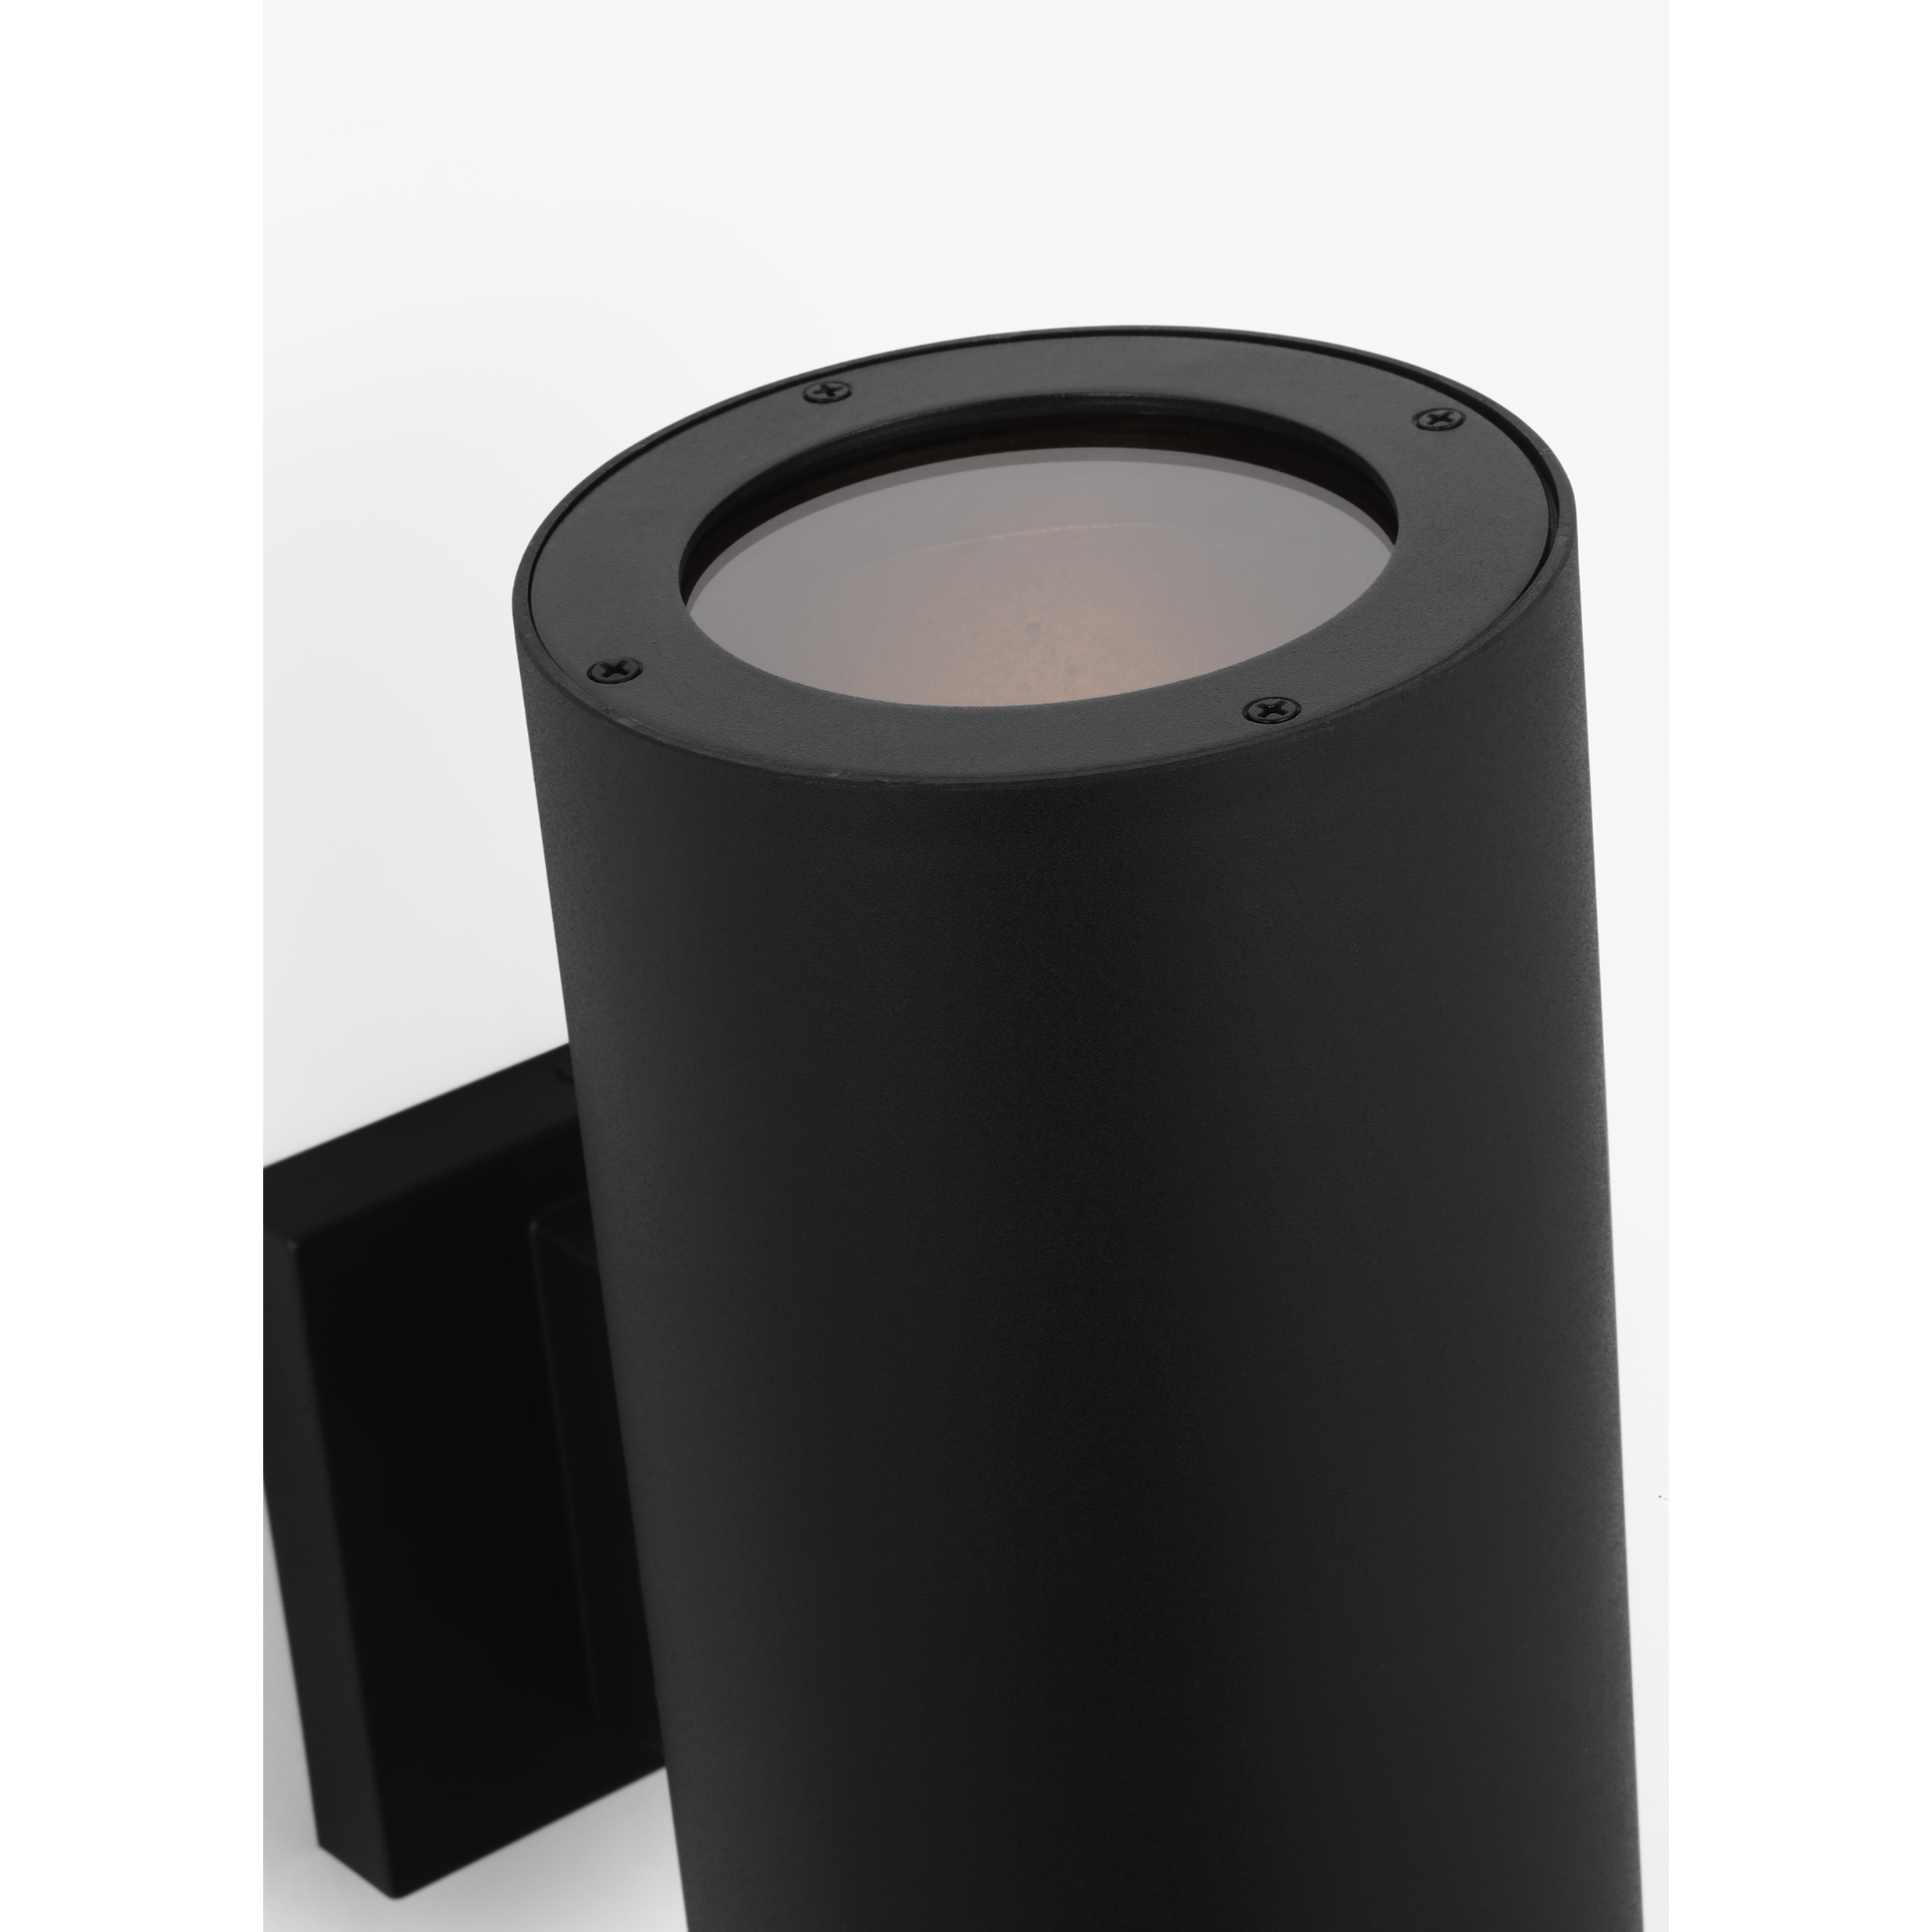 Outdoor Cylinders Medium 2-Light Wall Lantern